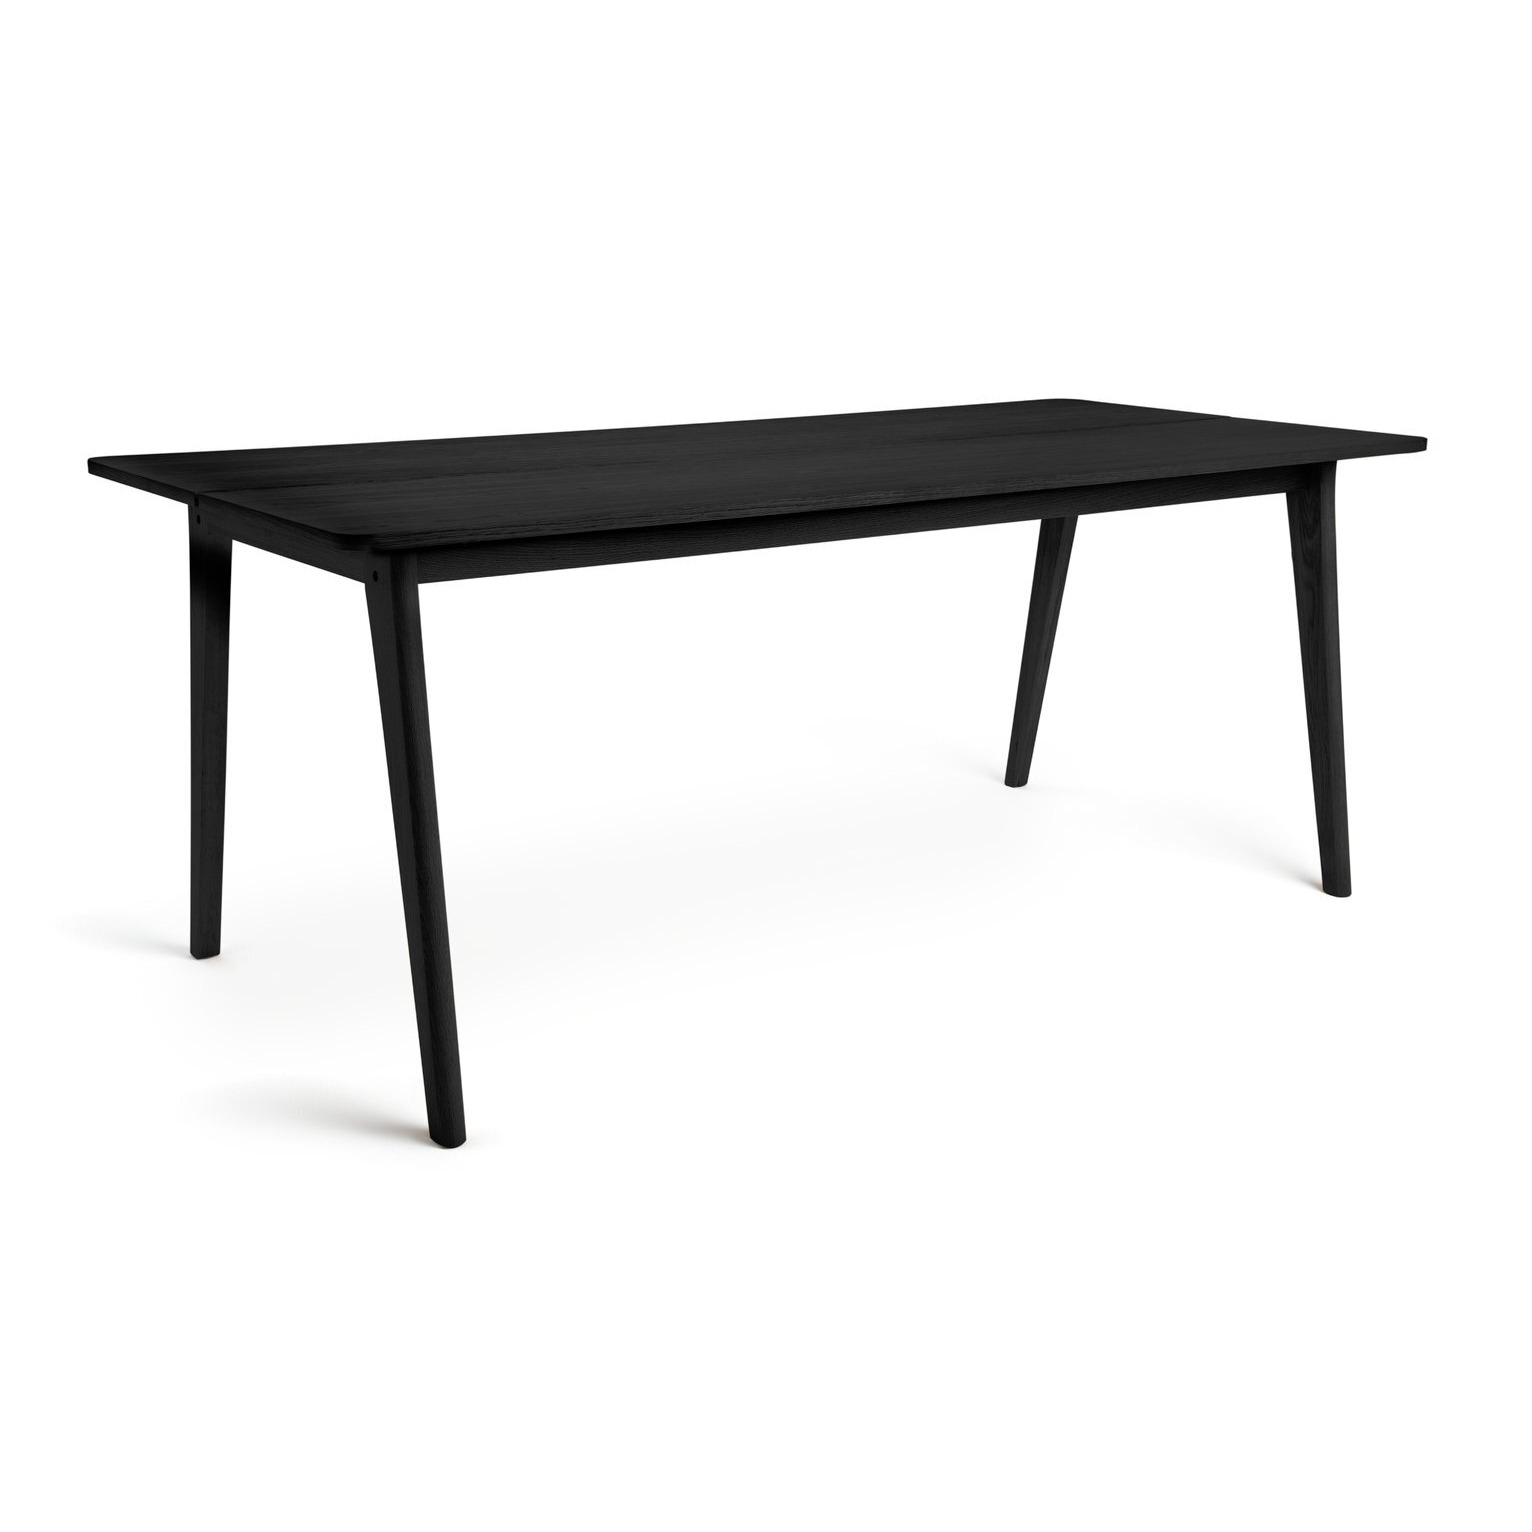 Habitat Nel Wood Dining Table - Black - image 1